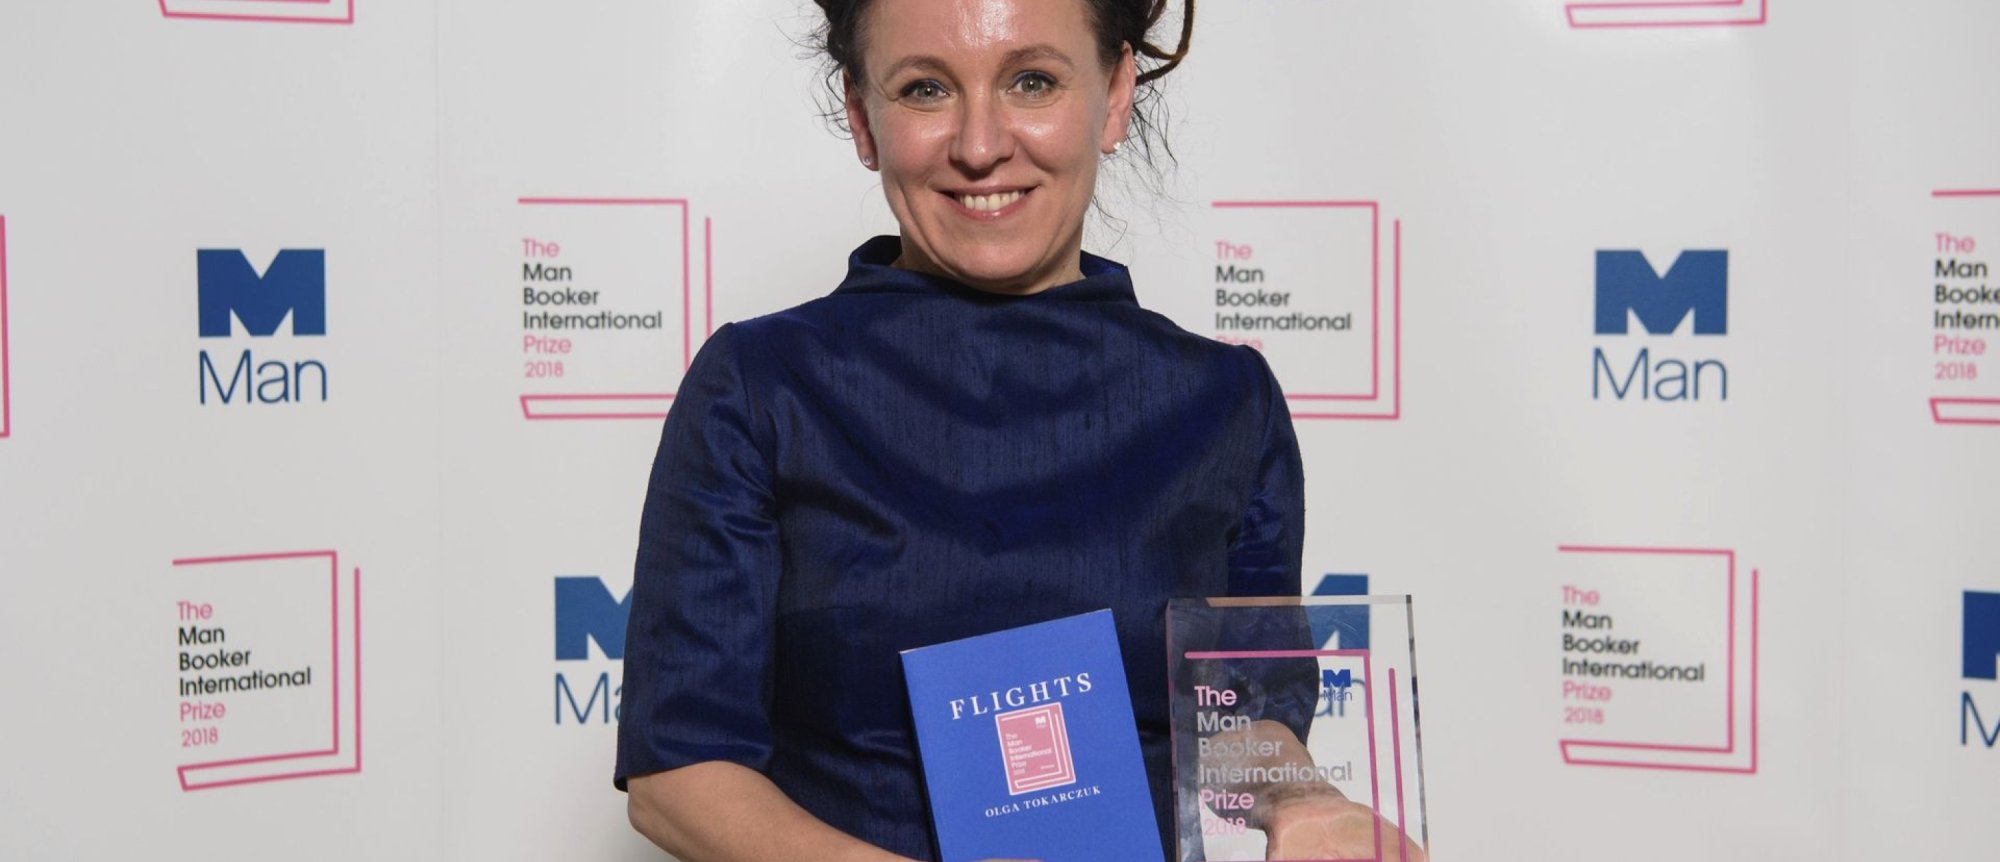 Man Booker International Prize naar Olga Tokarczuk